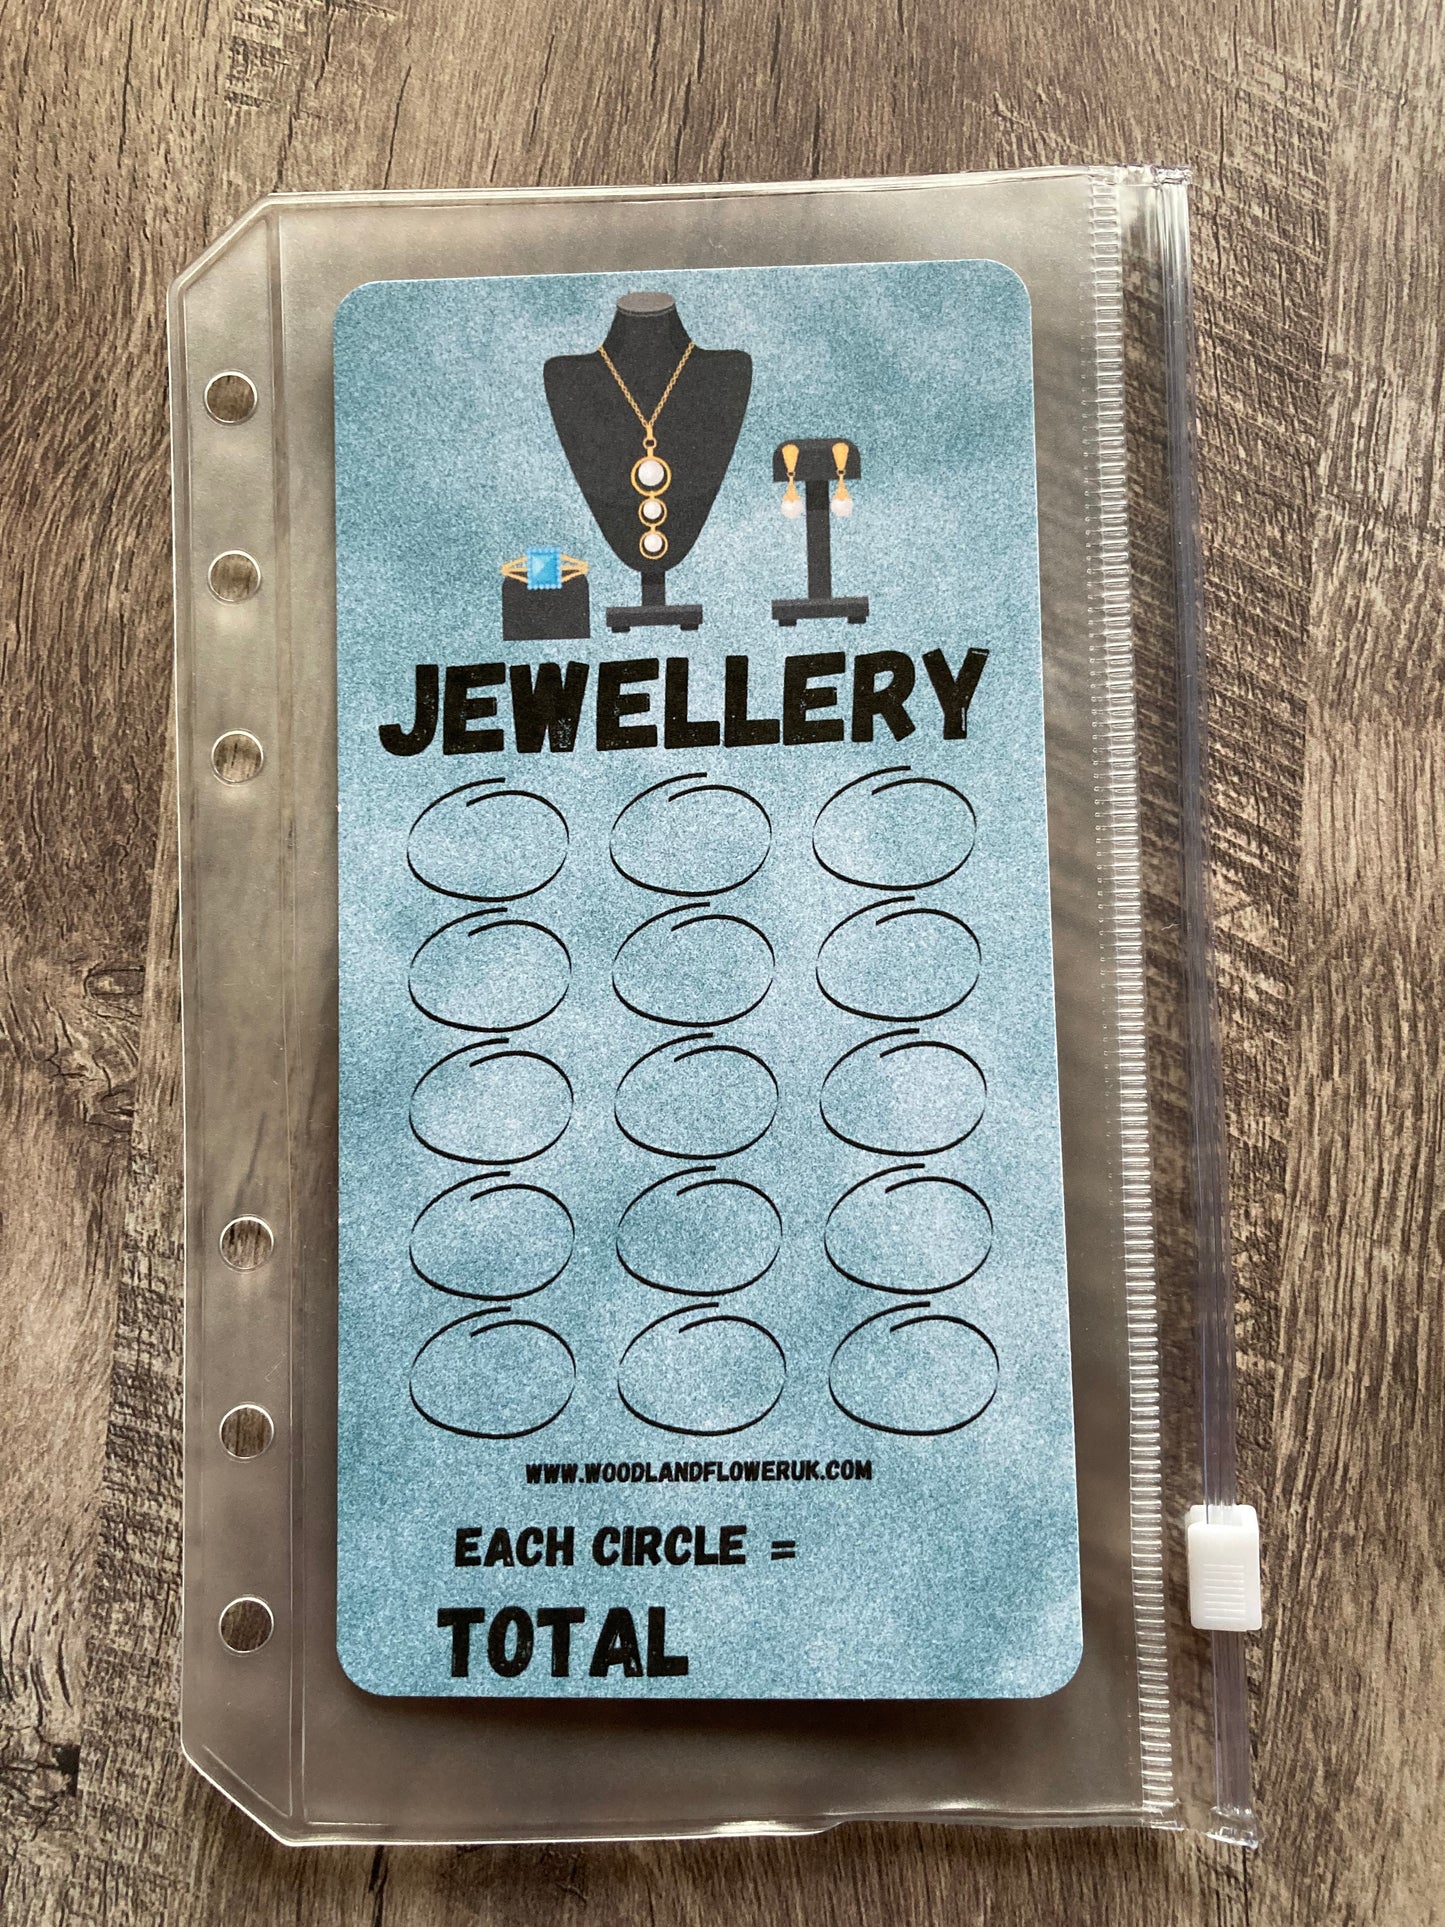 Saving challenge “jewellery”